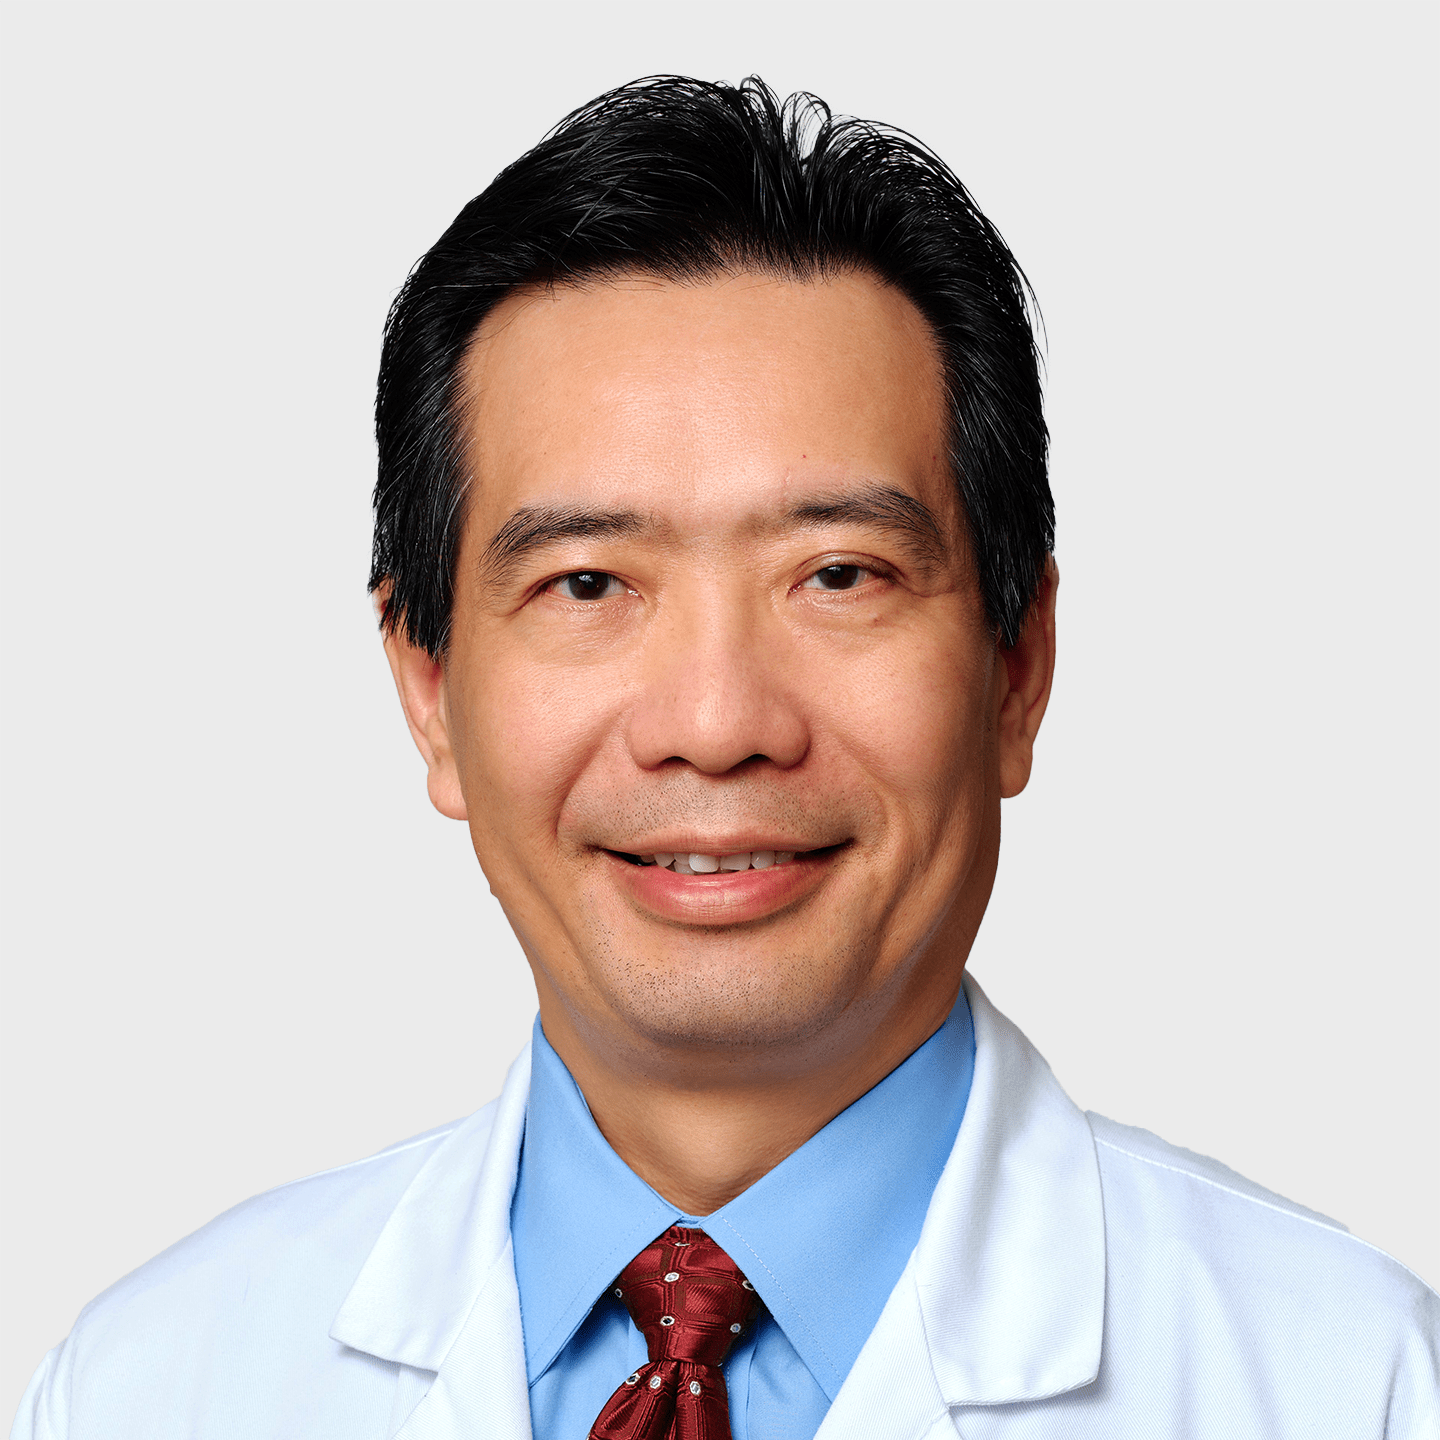 Physician Spotlight on Dr. Howard Wu